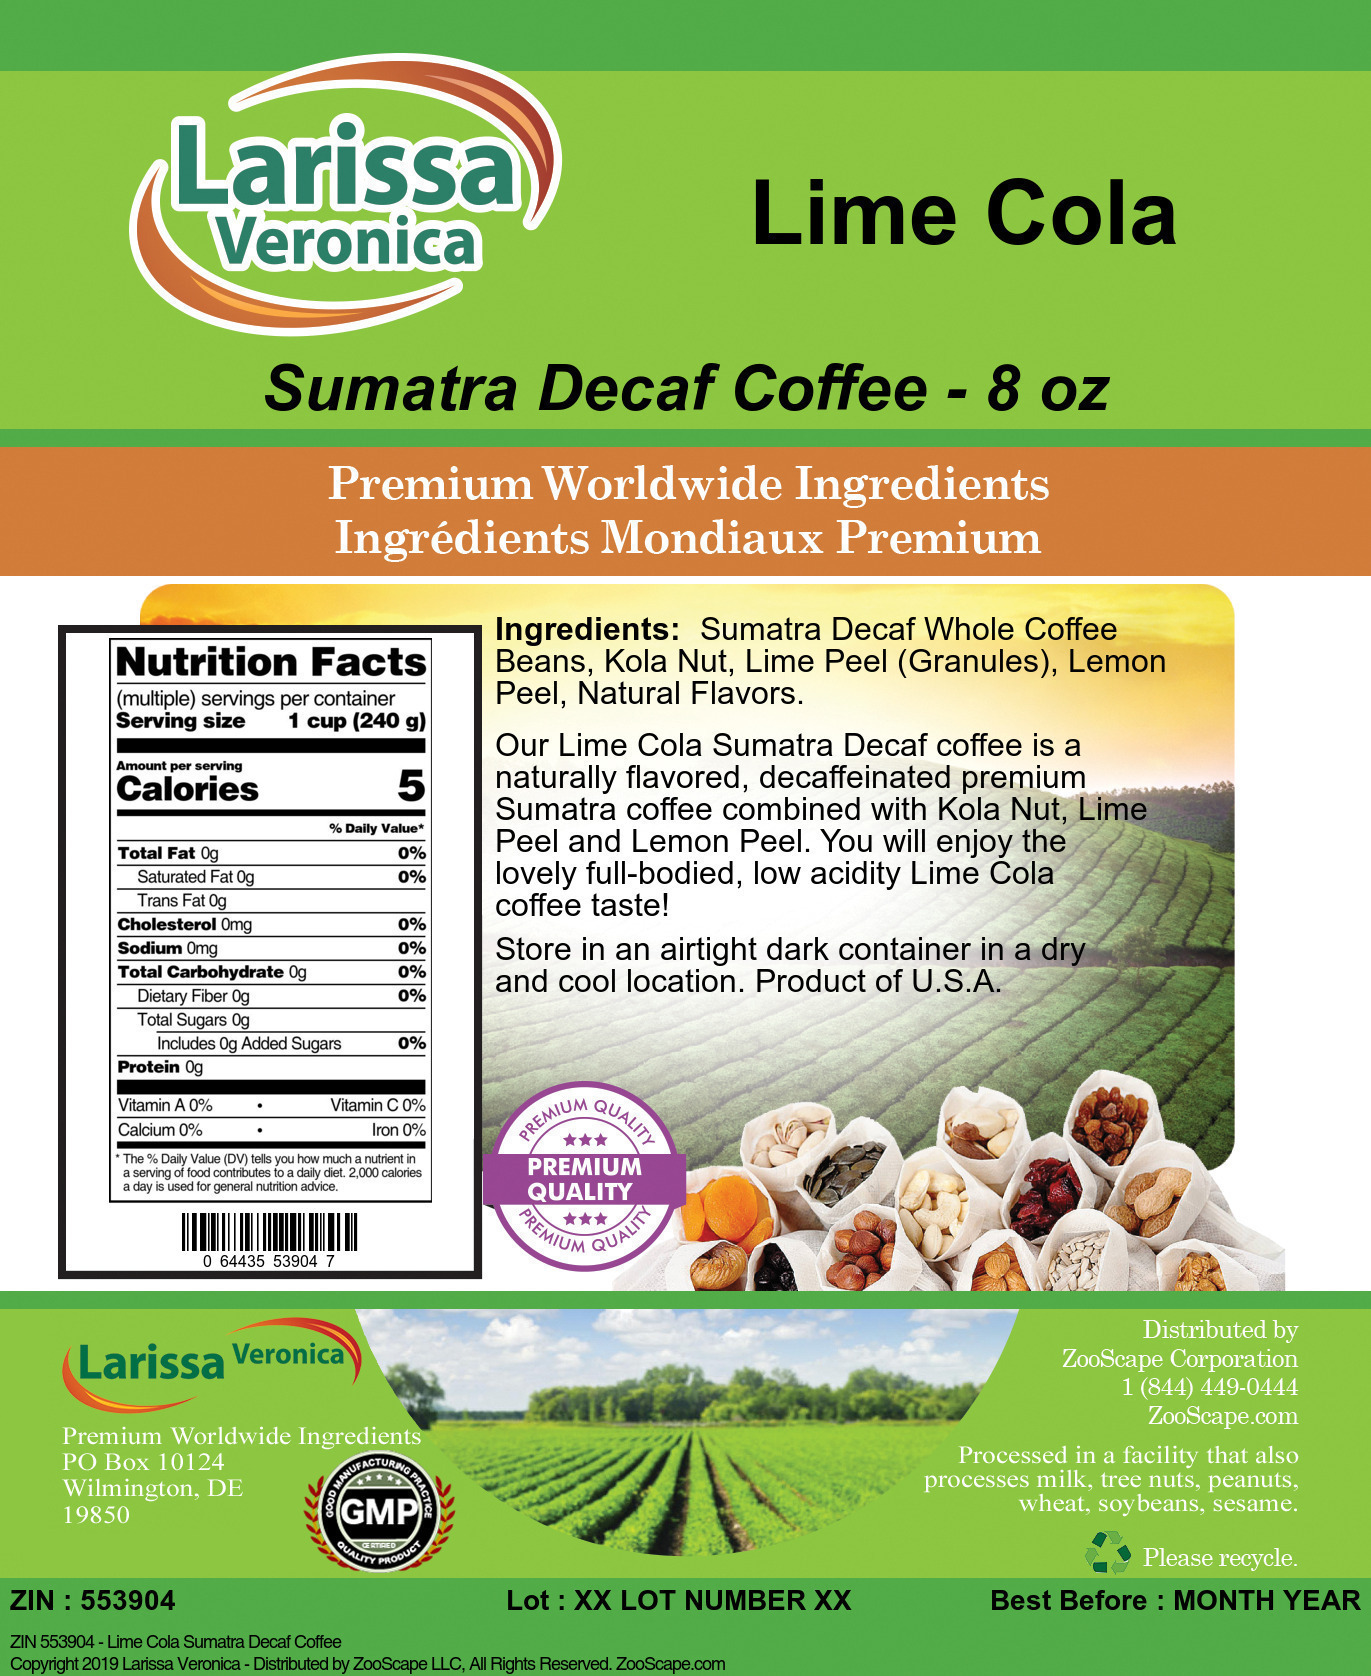 Lime Cola Sumatra Decaf Coffee - Label